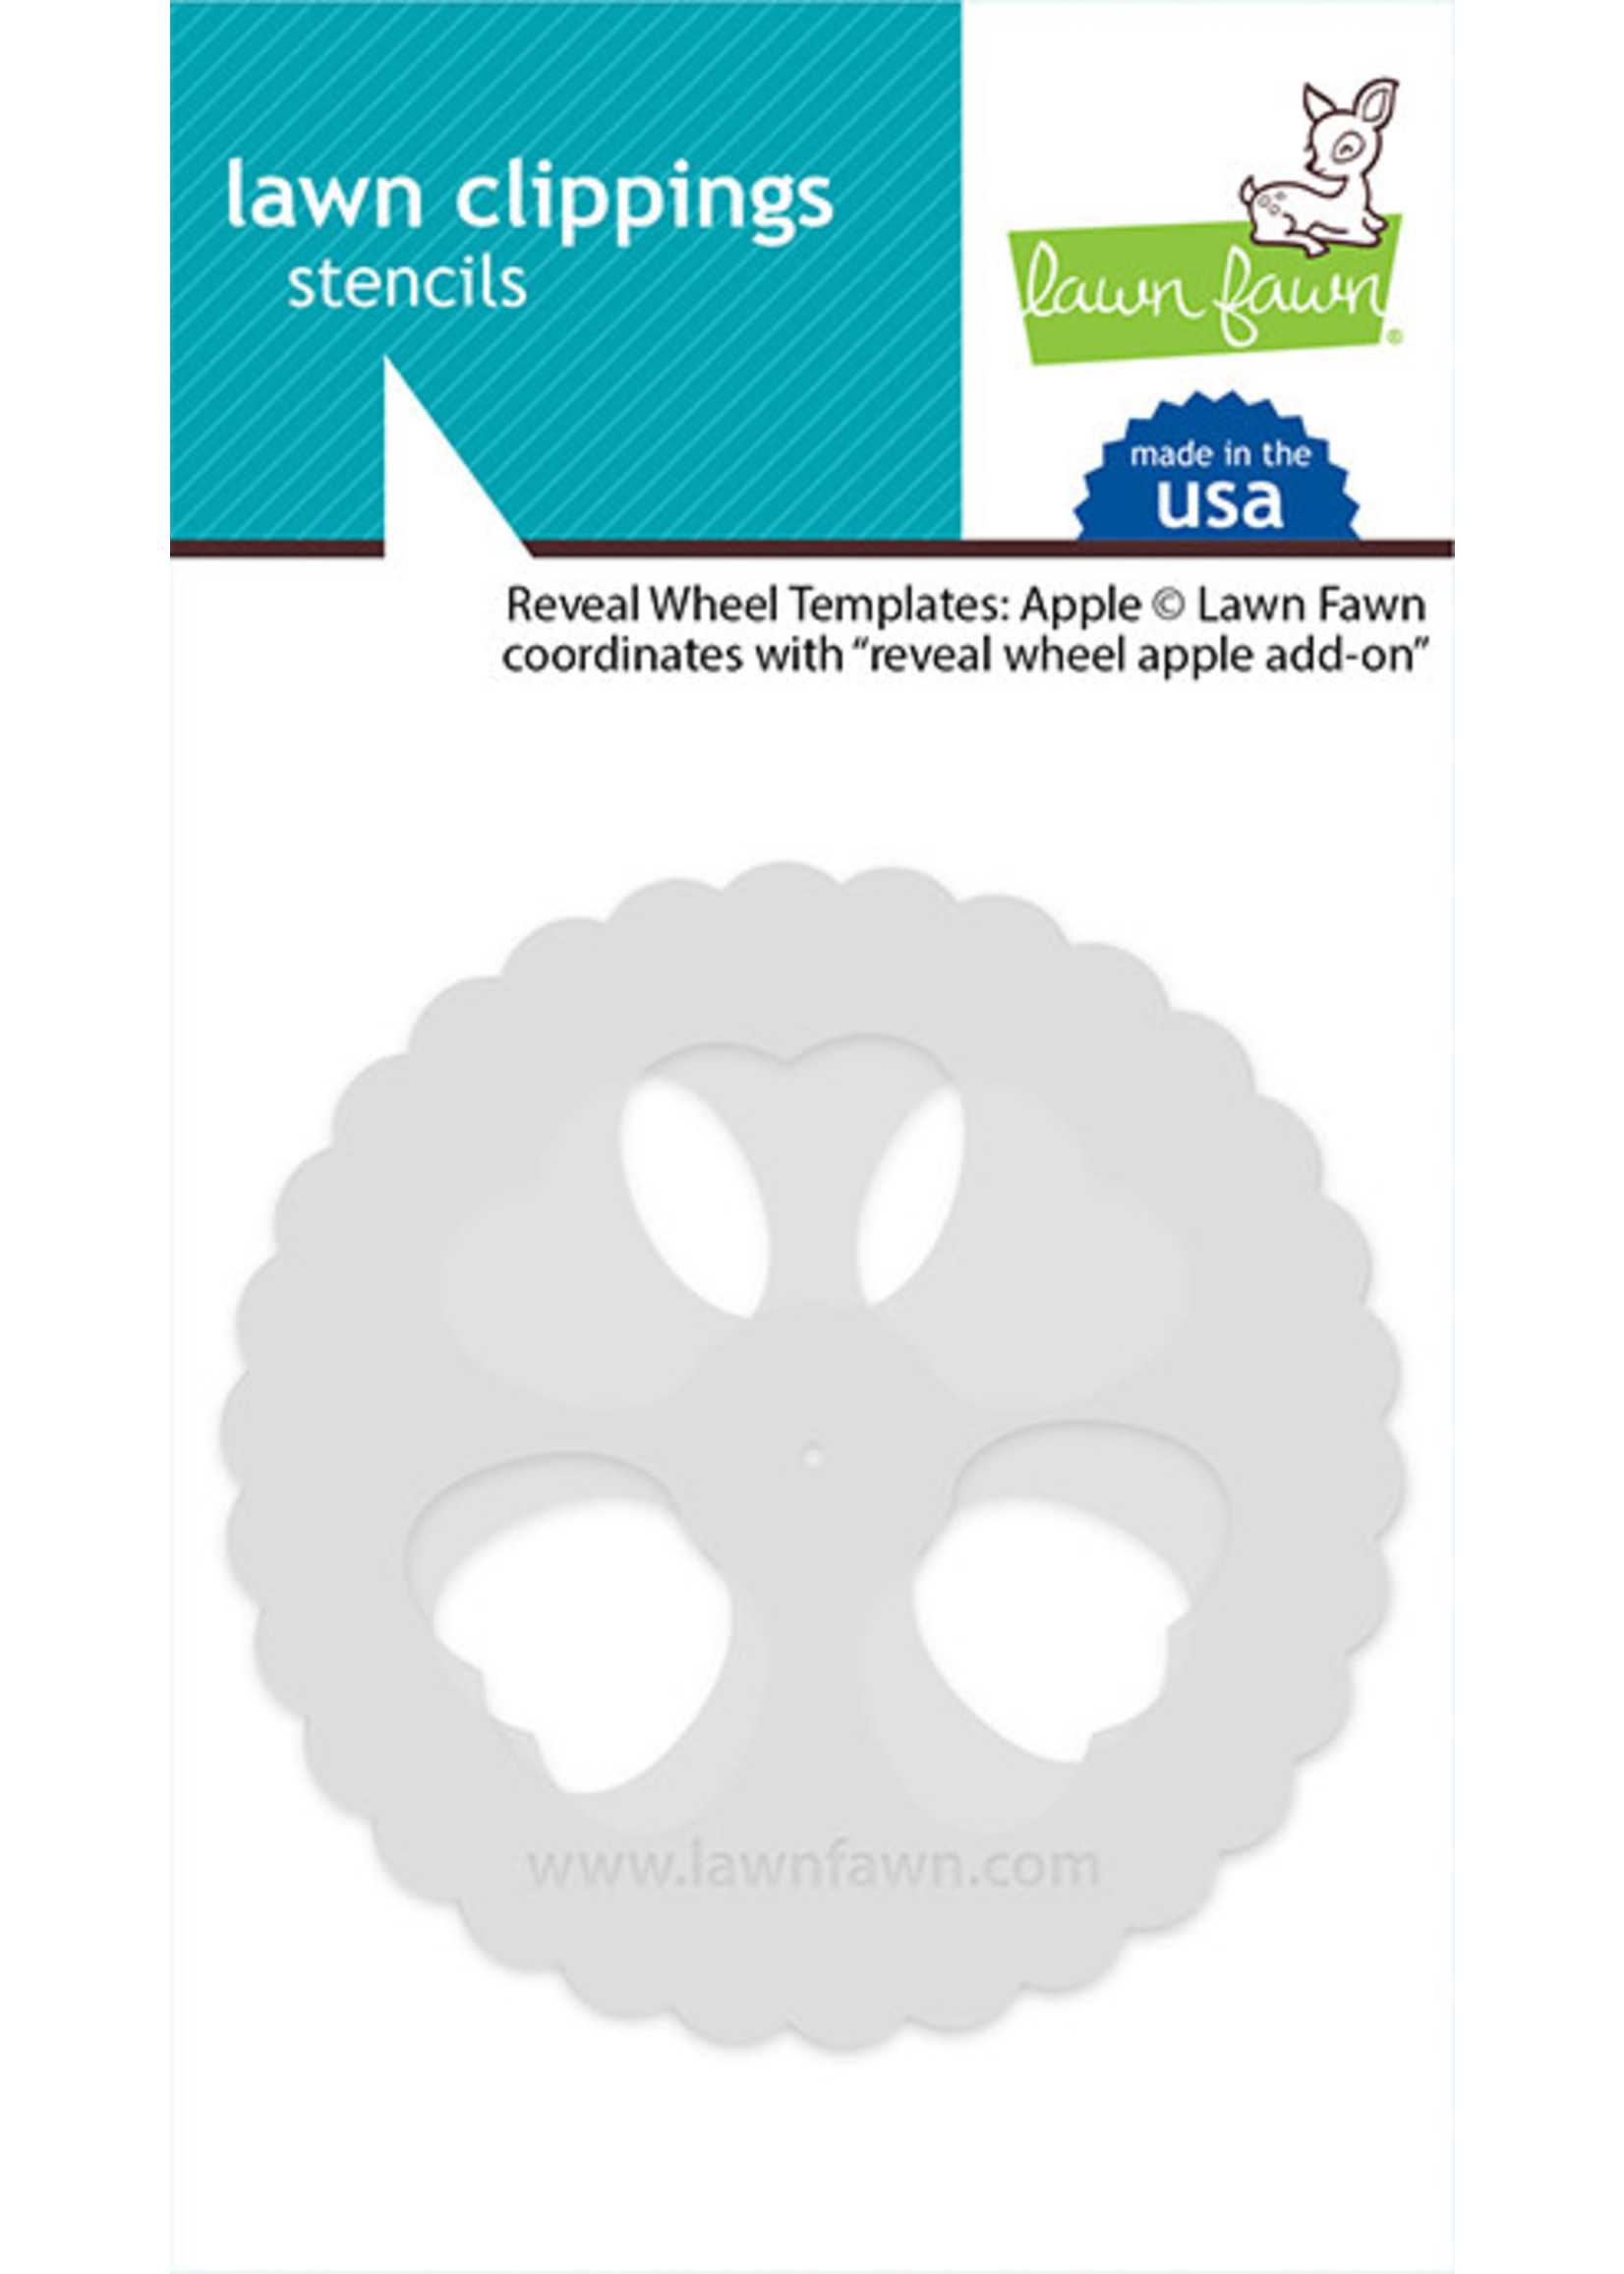 Lawn Fawn reveal wheel templates: apple